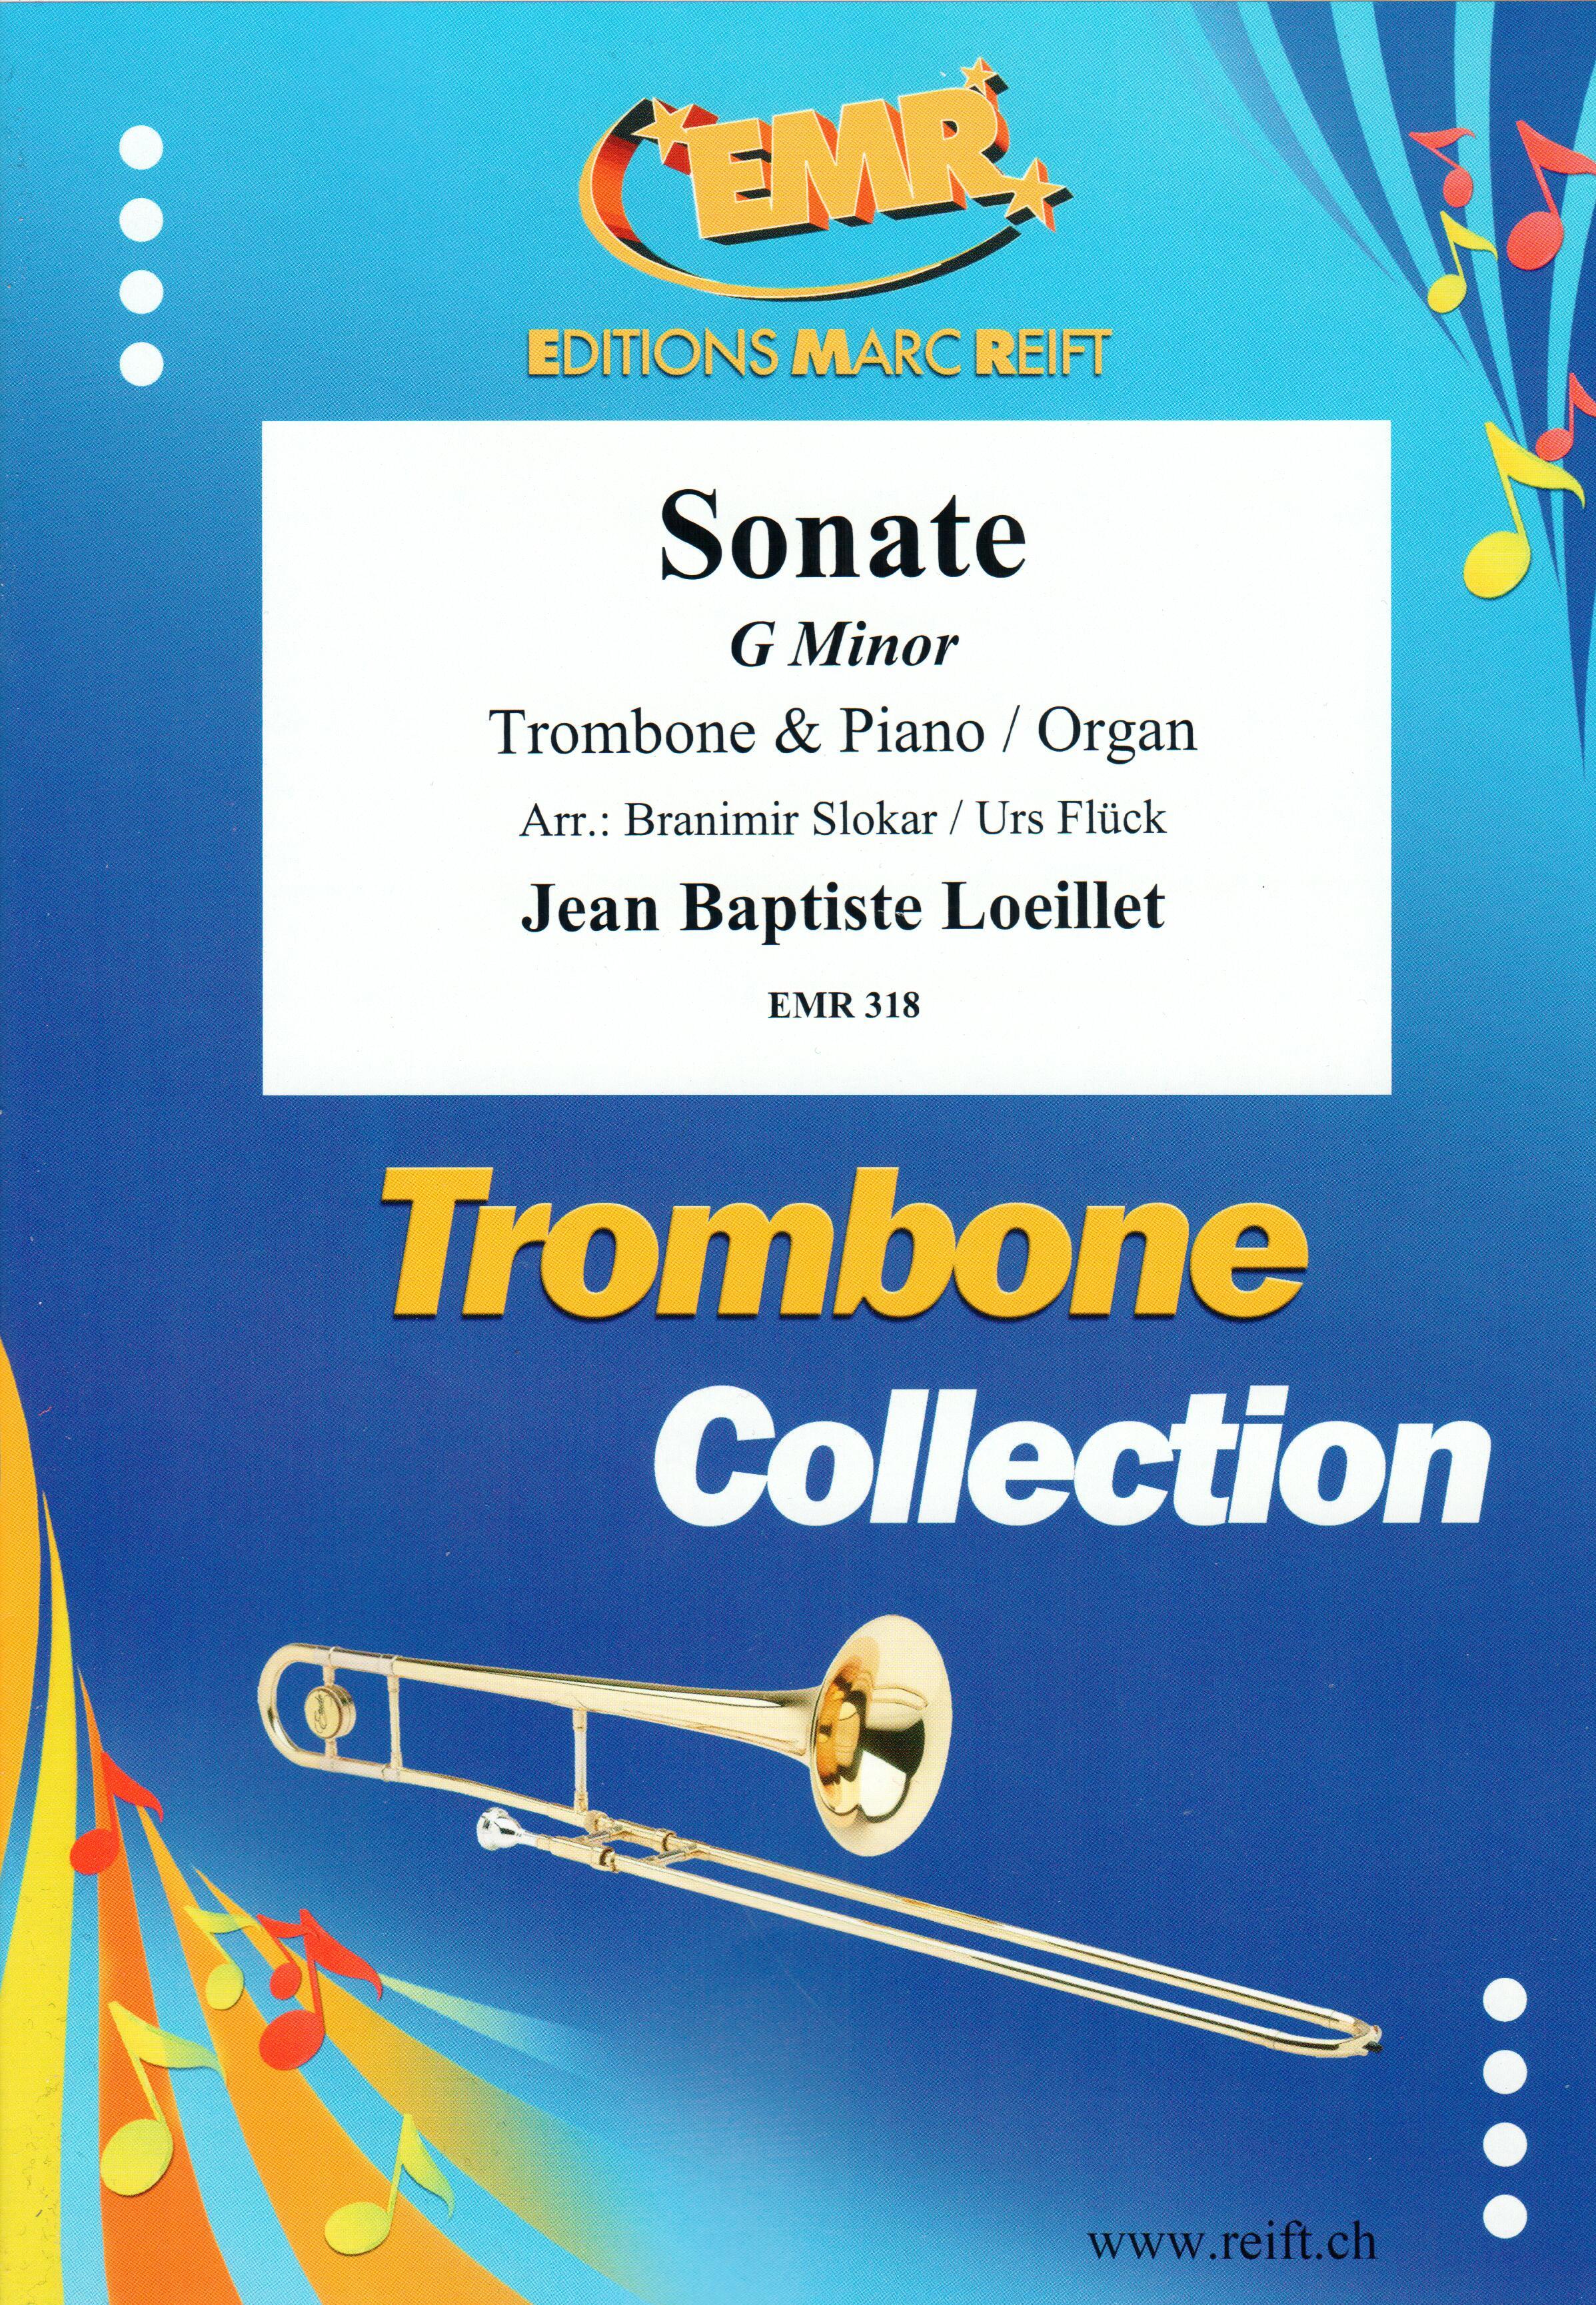 SONATE G MINOR, SOLOS - Trombone